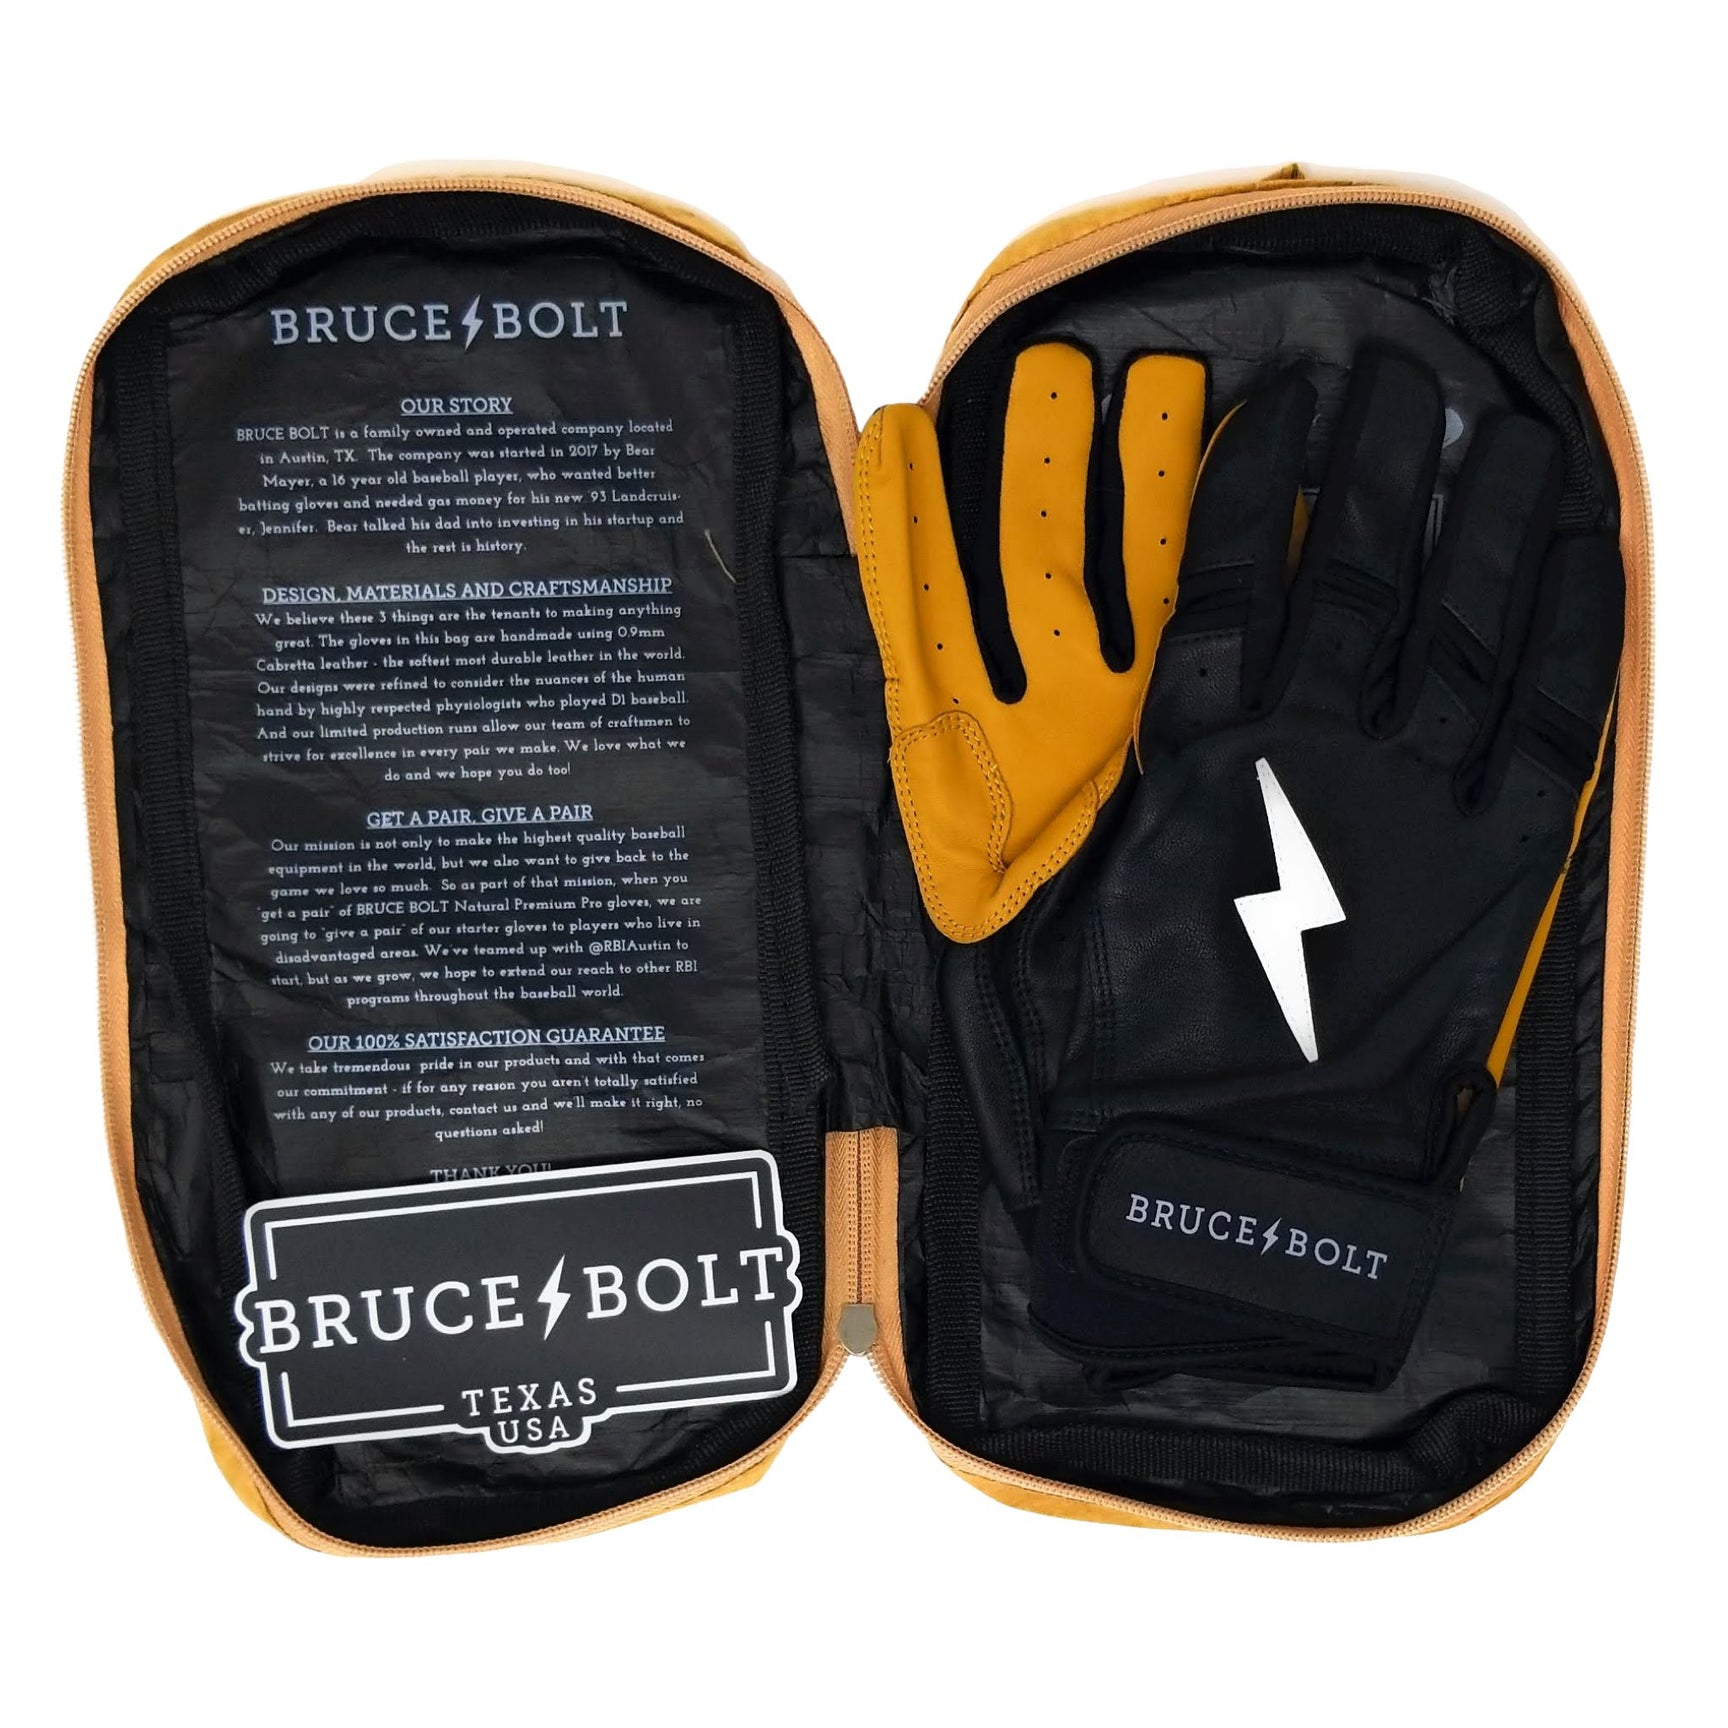 Bruce Bolt Youth Premium Pro Short Cuff Batting Gloves Black